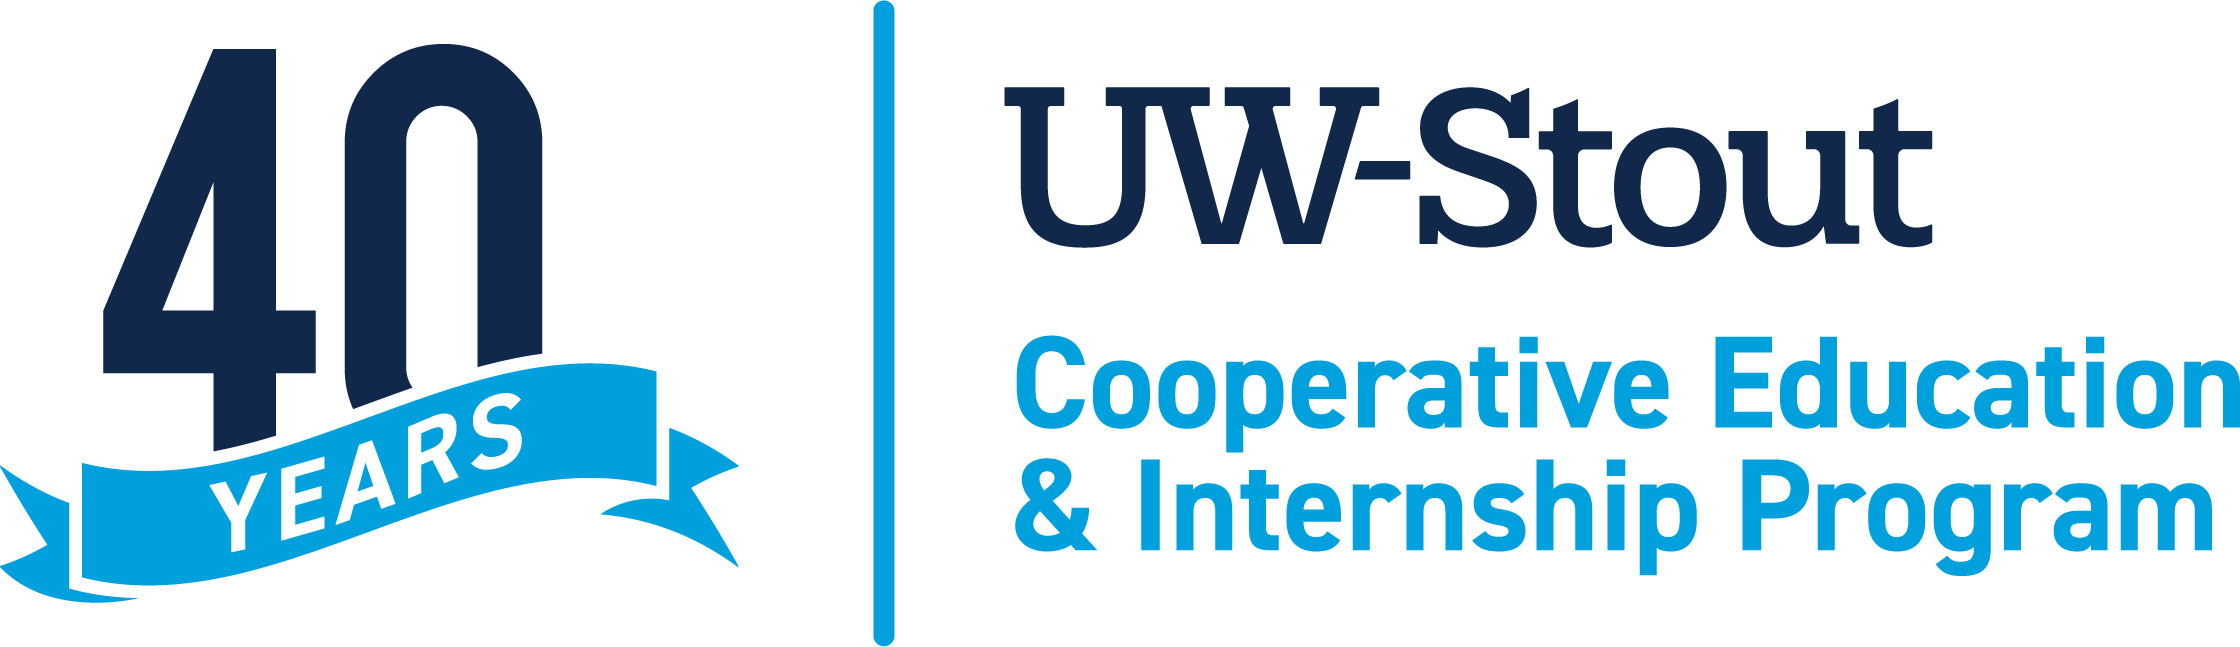 40 year logo of Cooperative Education and Internship Program